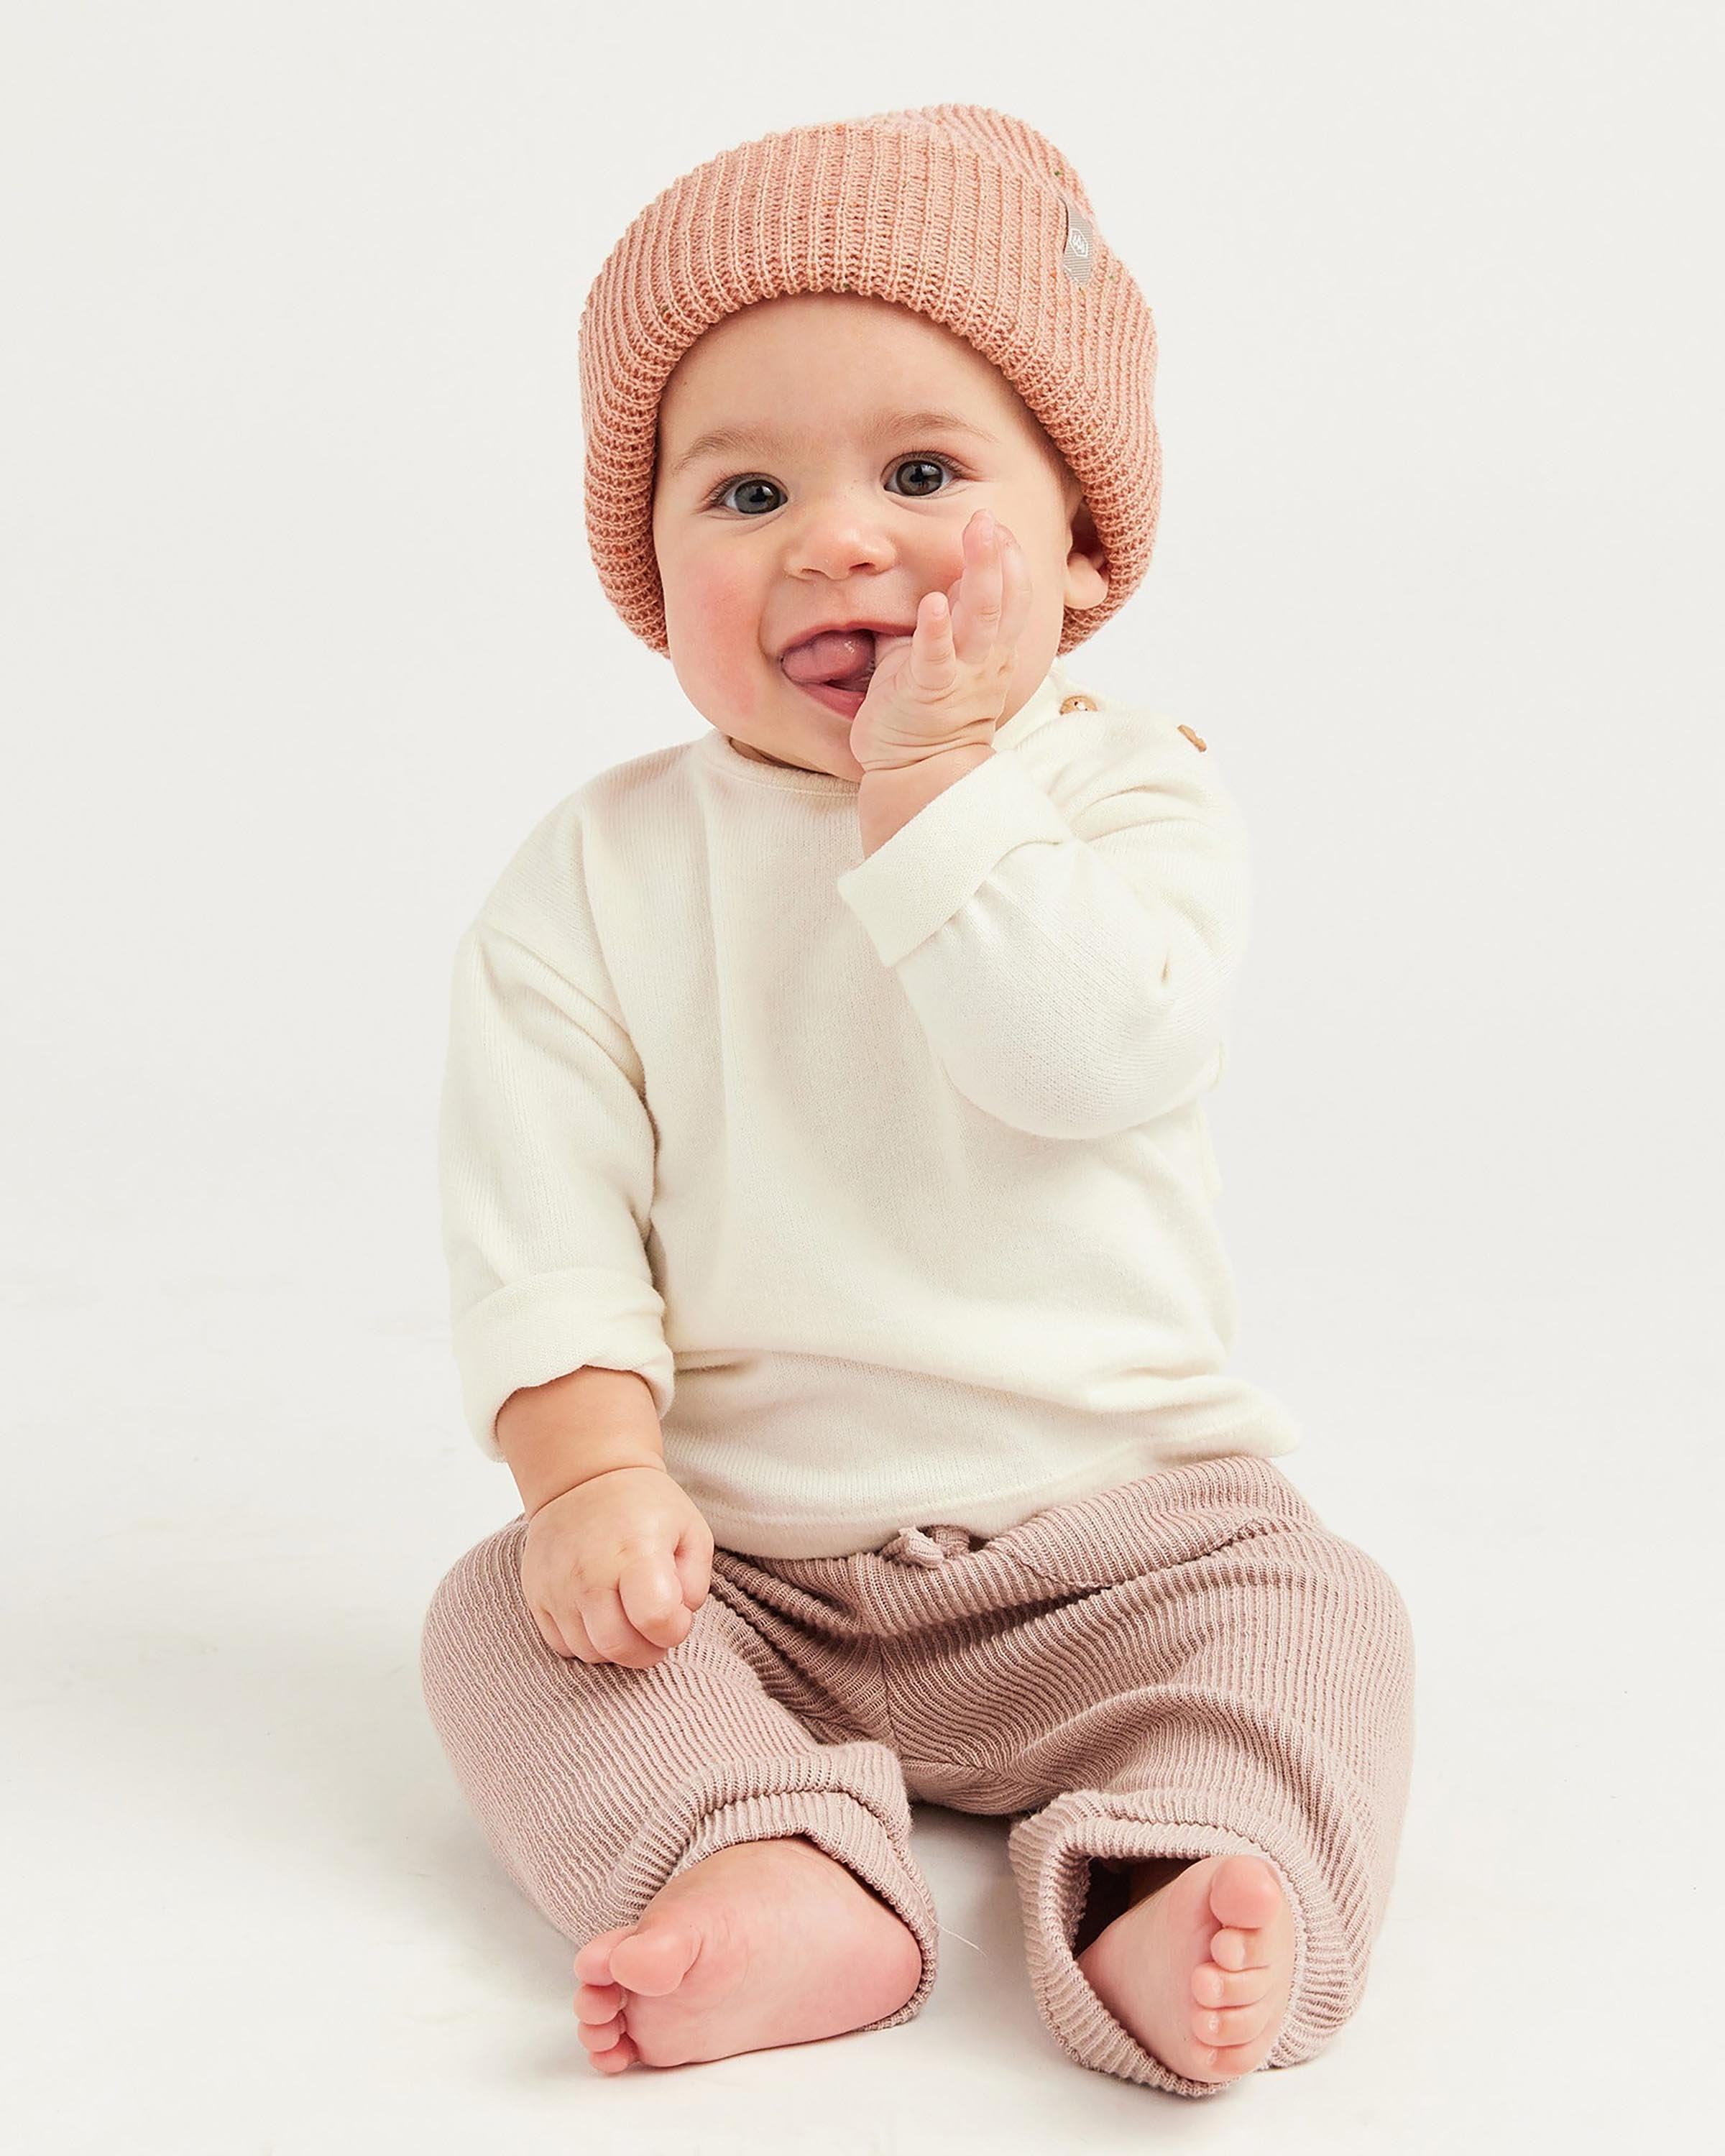 Baby Ranger Beanie in Pale Rose Fleck - undefined - Hemlock Hat Co. Beanies - Baby